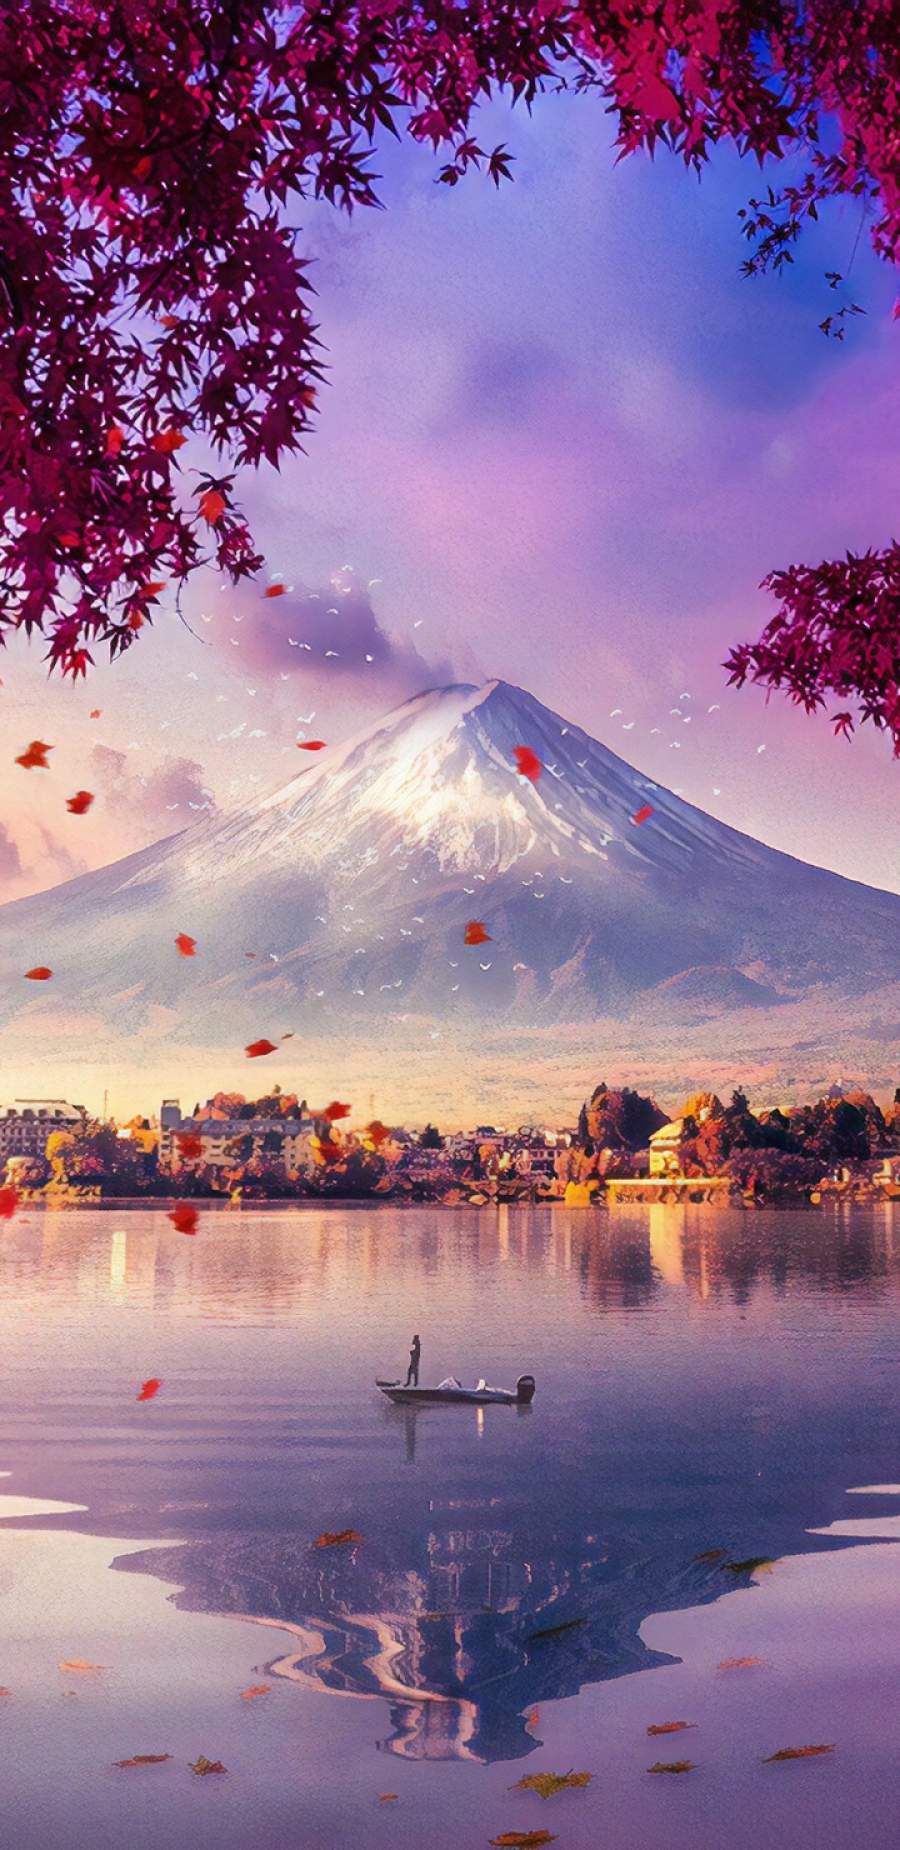 Mount Fuji View iPhone Wallpaper. iPhone wallpaper travel, Scenery wallpaper, Japanese wallpaper iphone